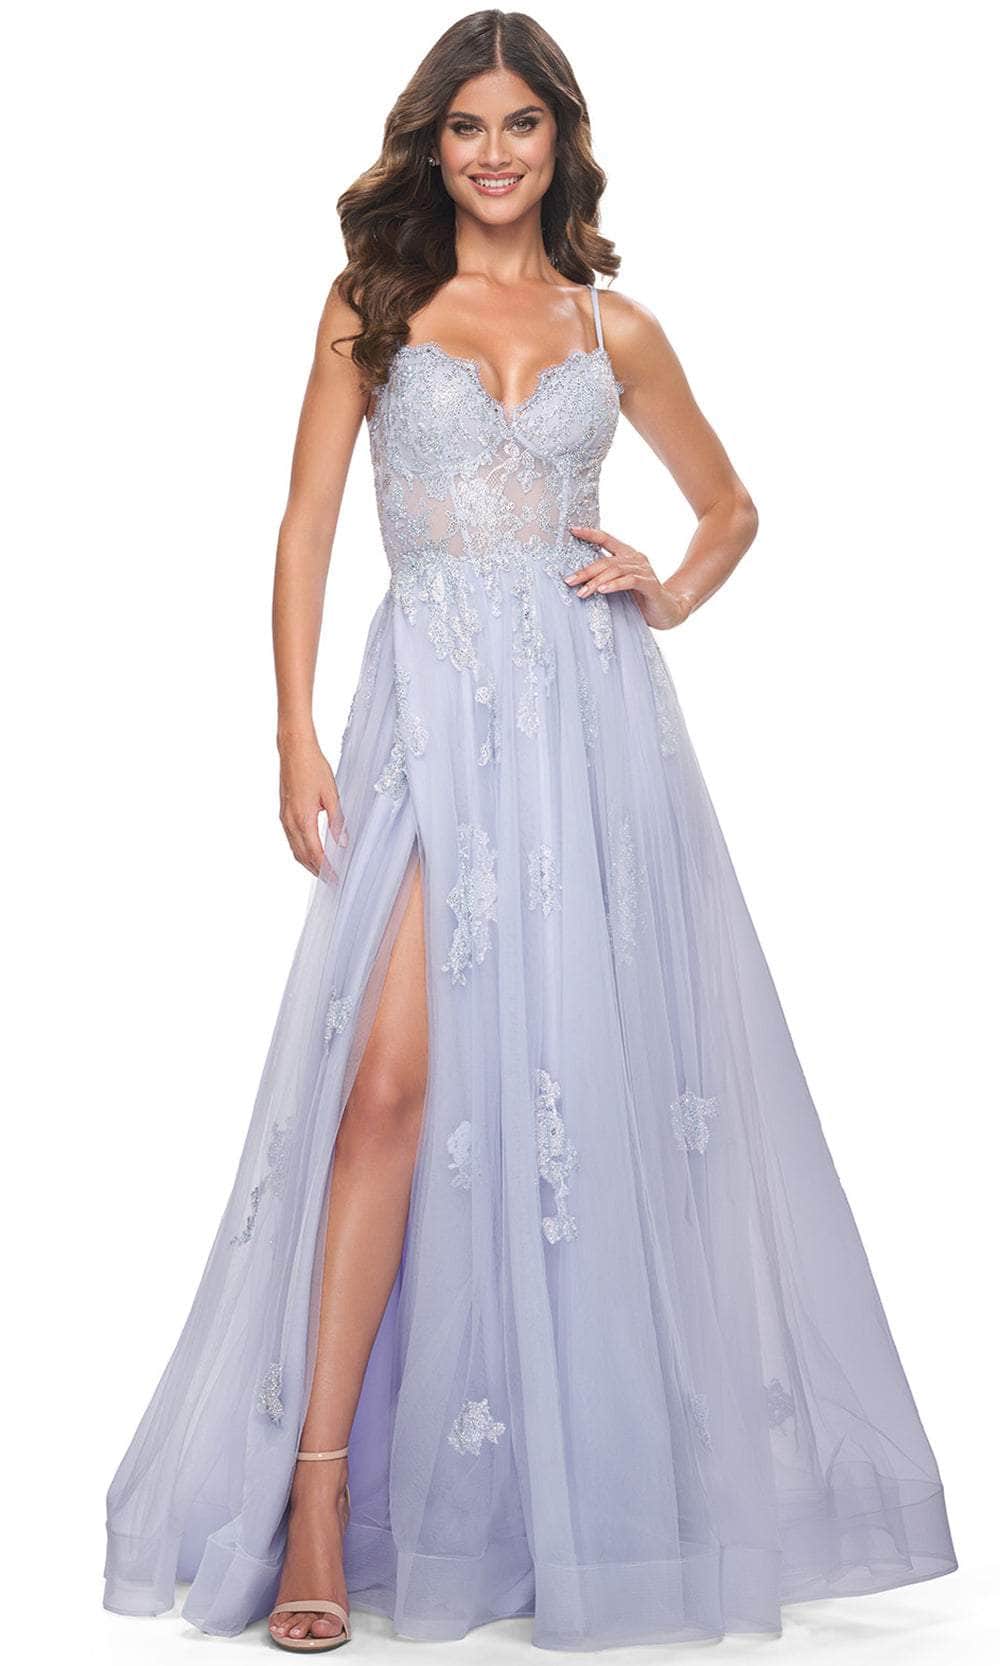 Image of La Femme 32028 - Lace Styled Prom Dress